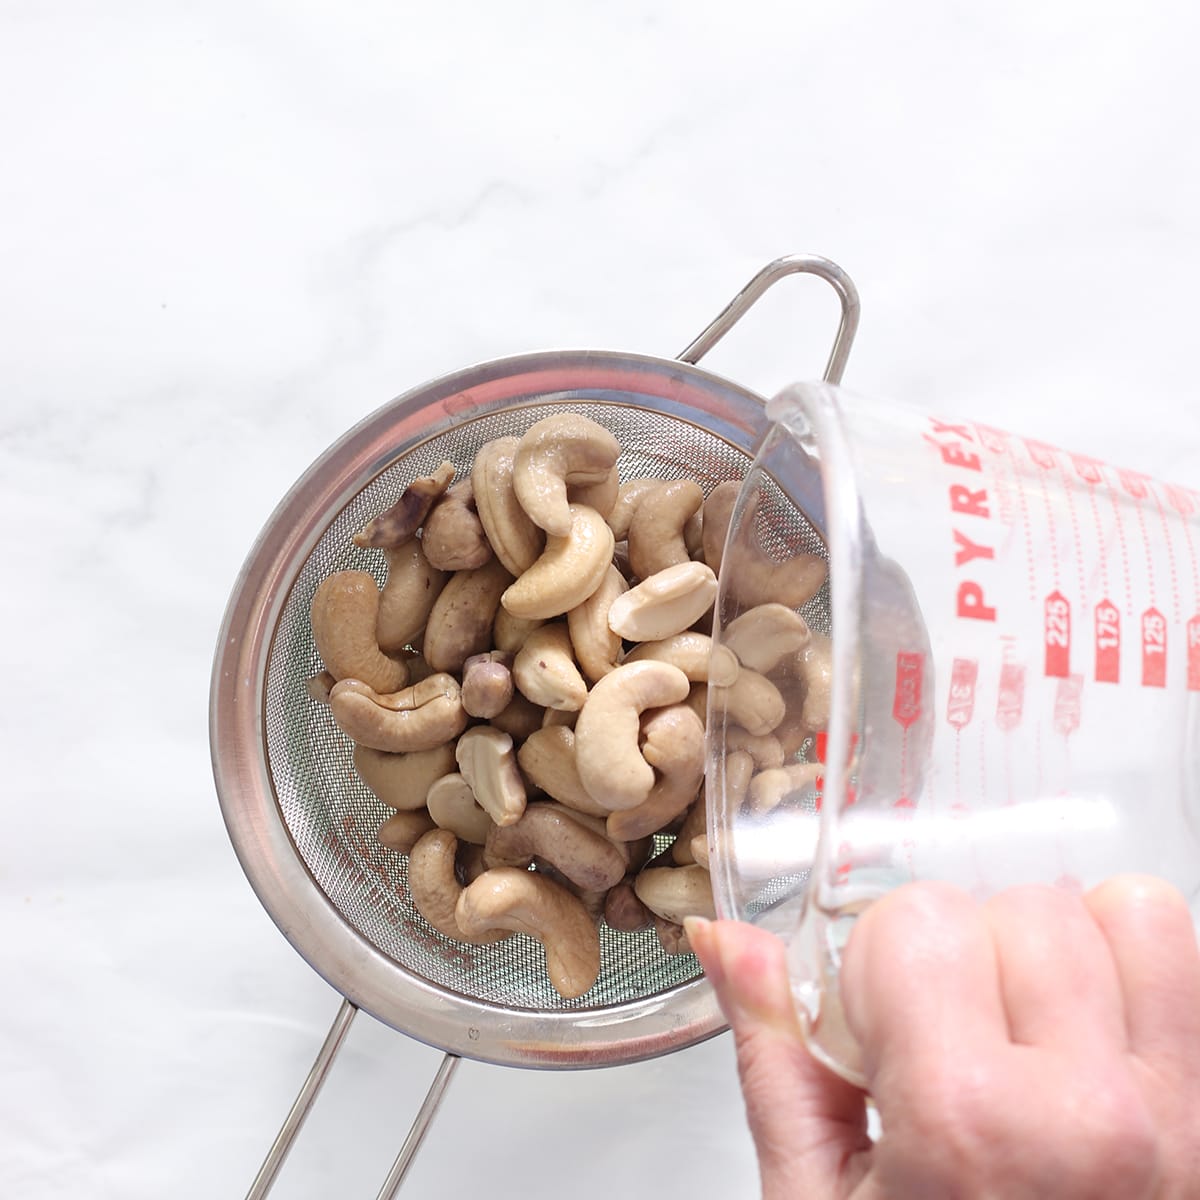 rinse cashews after soaking.